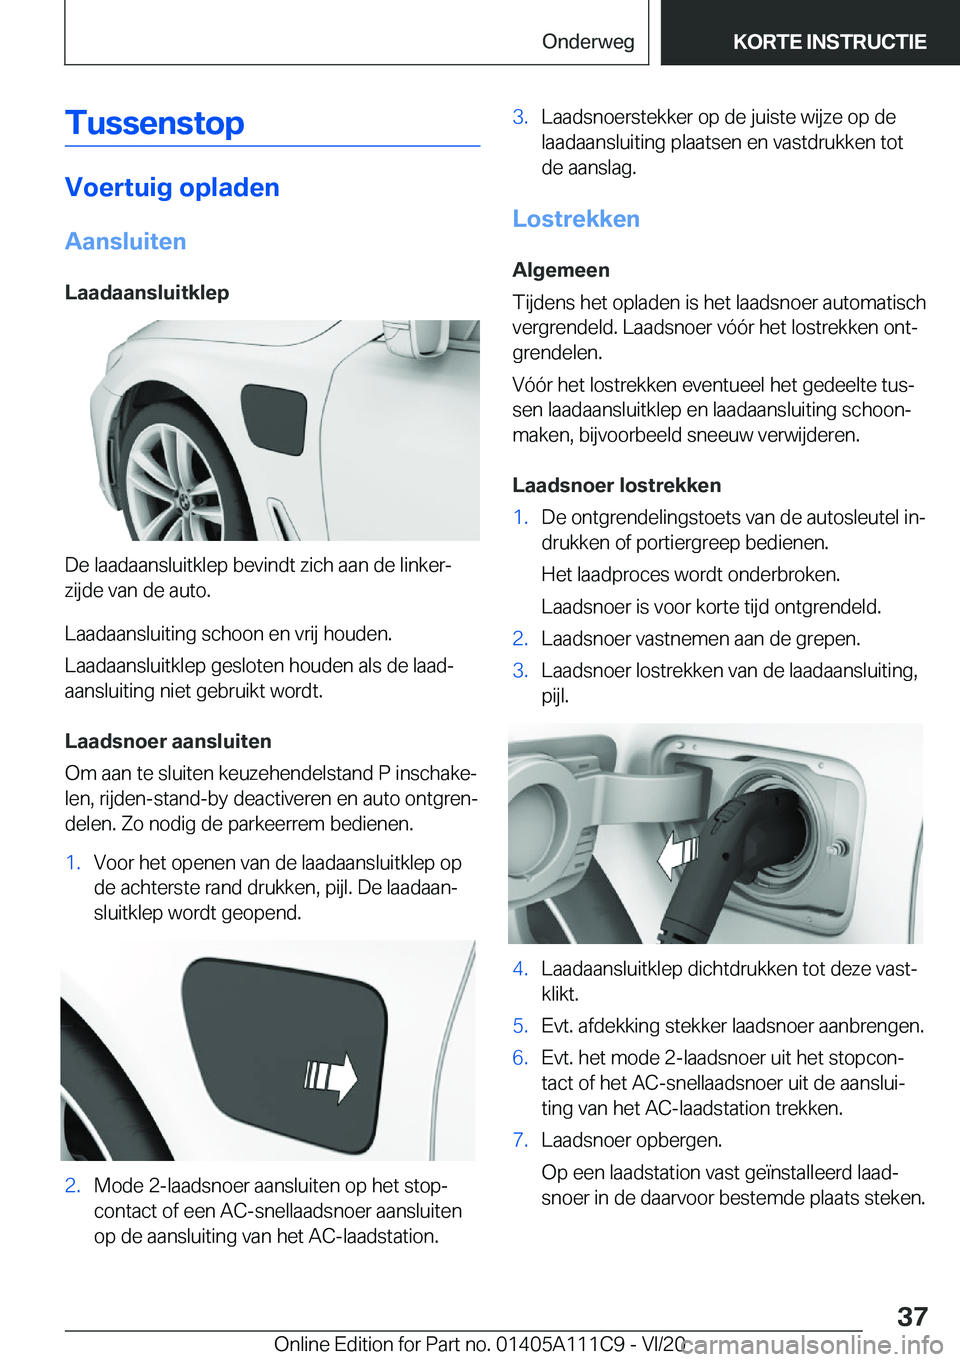 BMW 3 SERIES SEDAN PLUG-IN HYBRID 2021  Instructieboekjes (in Dutch) �T�u�s�s�e�n�s�t�o�p
�V�o�e�r�t�u�i�g��o�p�l�a�d�e�n
�A�a�n�s�l�u�i�t�e�n
�L�a�a�d�a�a�n�s�l�u�i�t�k�l�e�p
�D�e��l�a�a�d�a�a�n�s�l�u�i�t�k�l�e�p��b�e�v�i�n�d�t��z�i�c�h��a�a�n��d�e��l�i�n�k�e�r